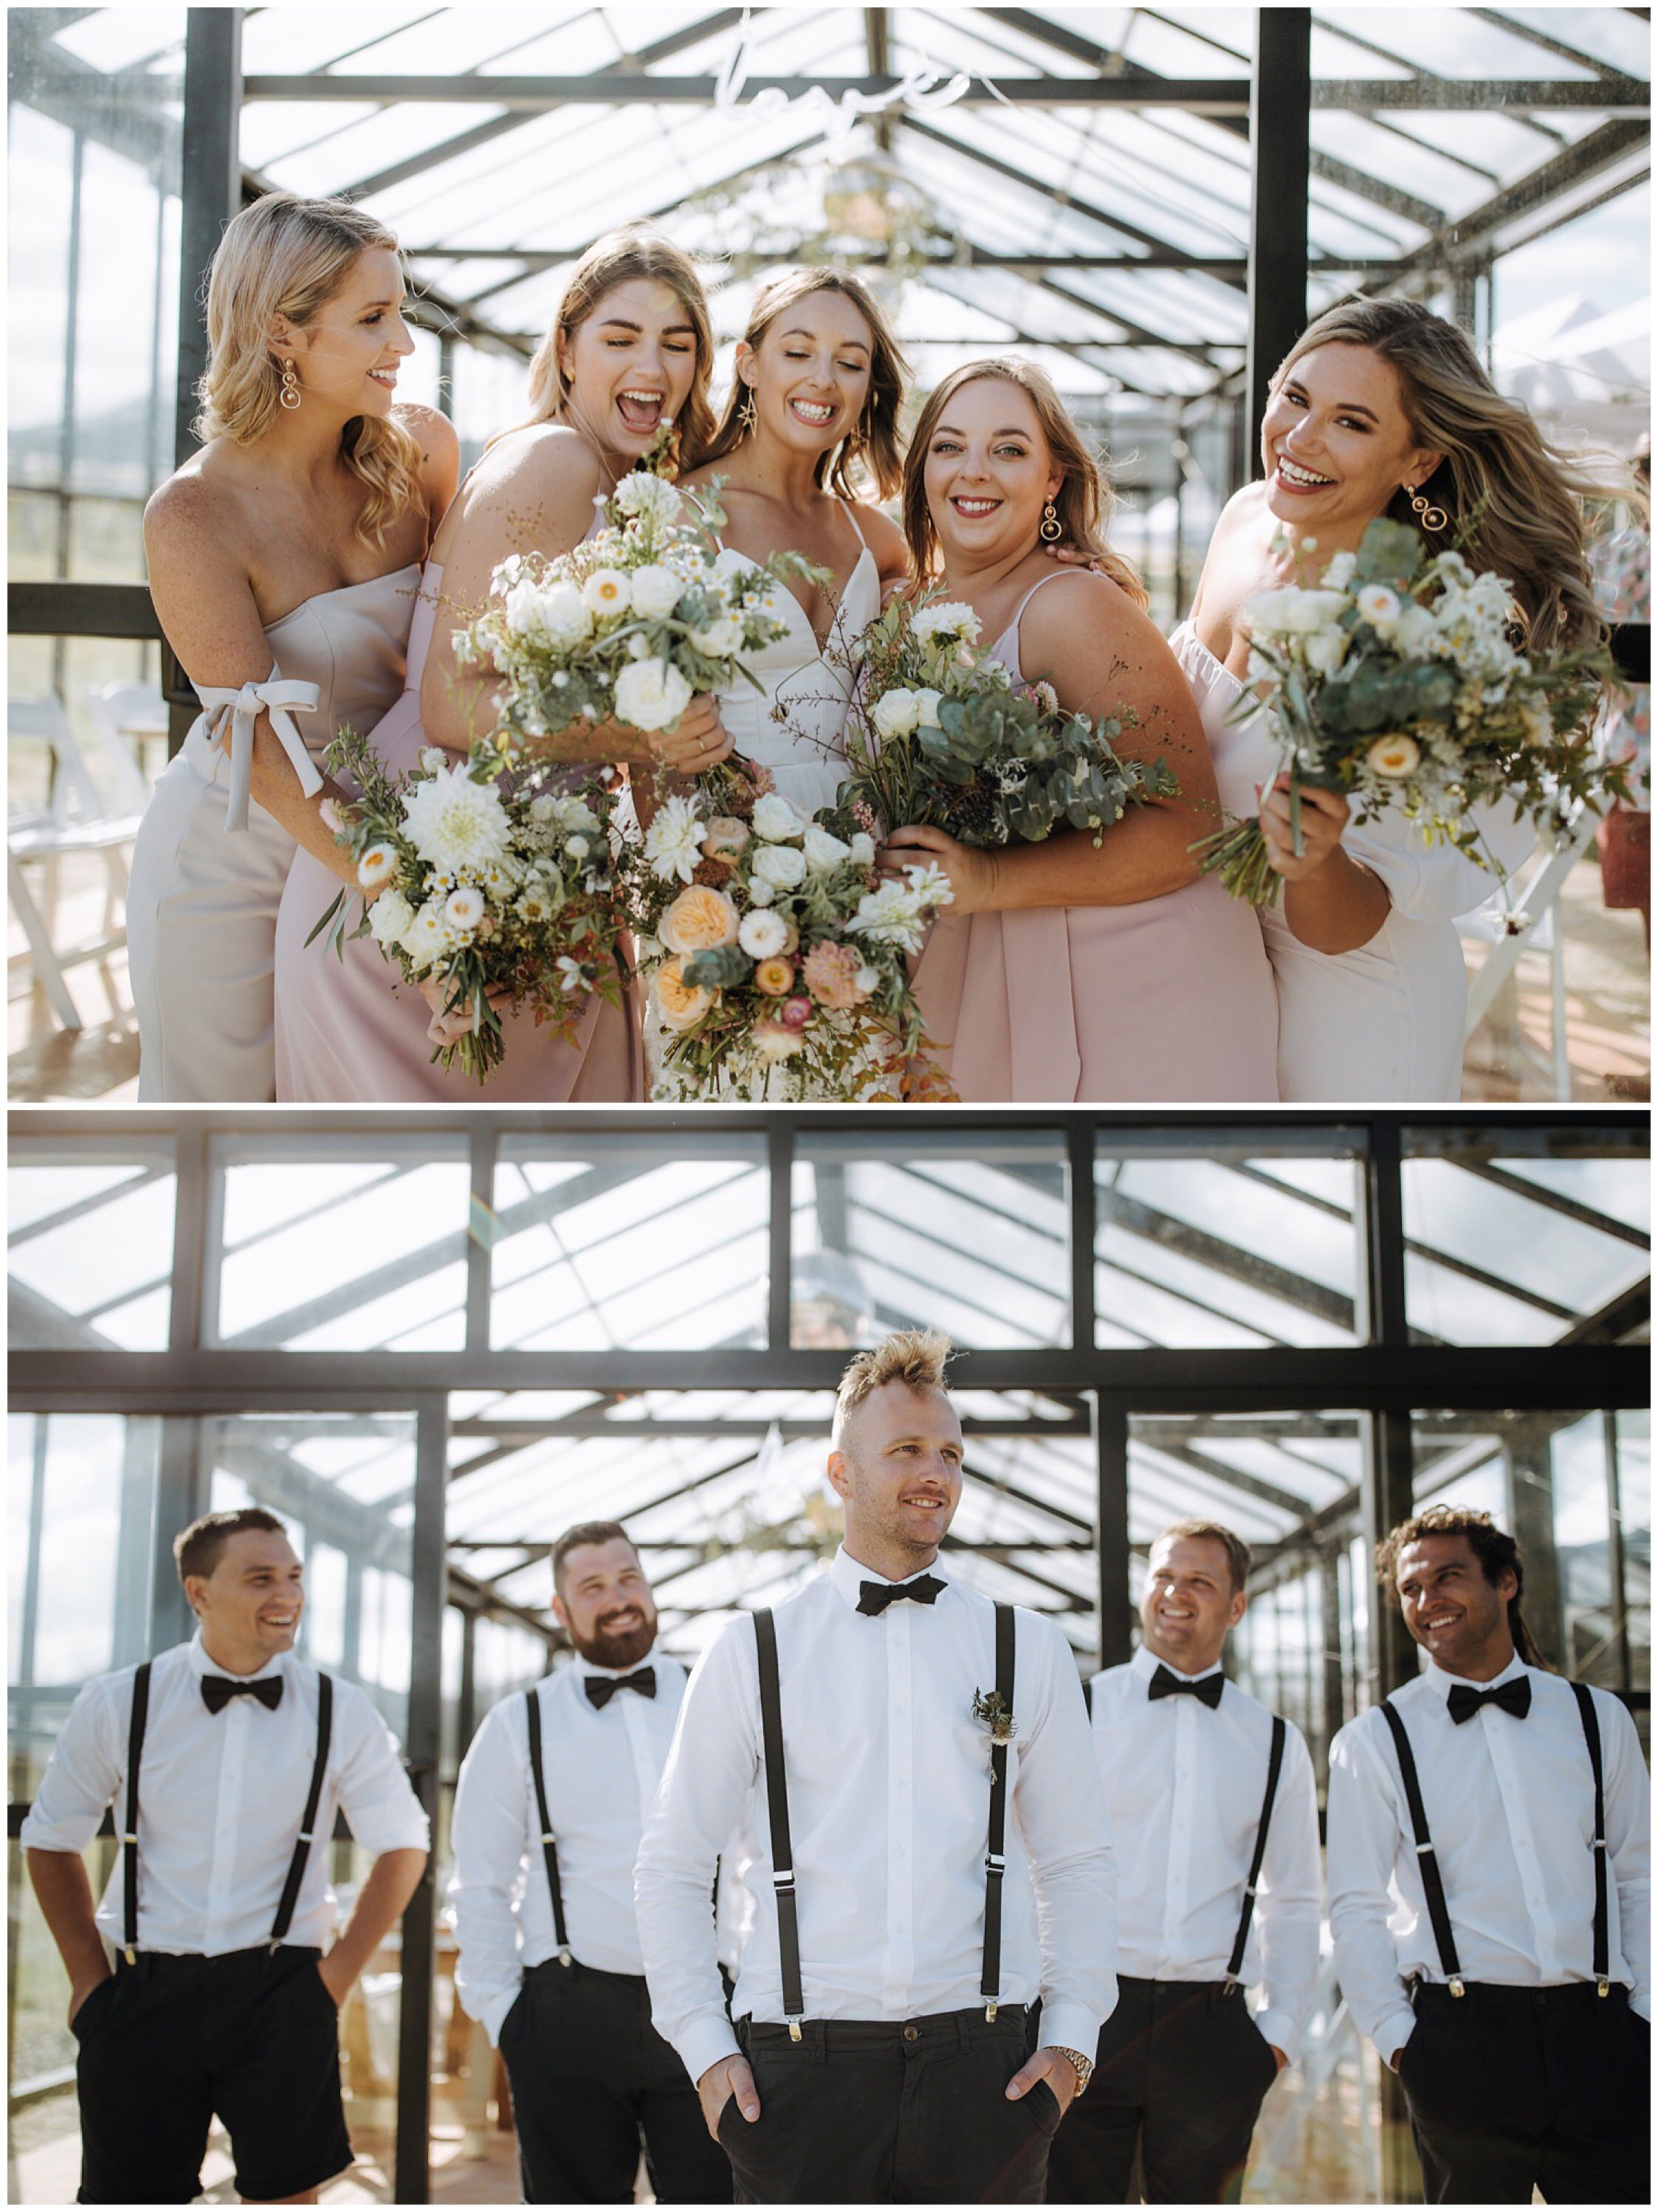 Zanda+Auckland+wedding+photographer+boho+retro+suspenders+groom+denim+jacket+bride+Te+Whai+Bay+Wines+venue+bright+glass+house+vineyard+photoshoot+New+Zealand_32.jpeg